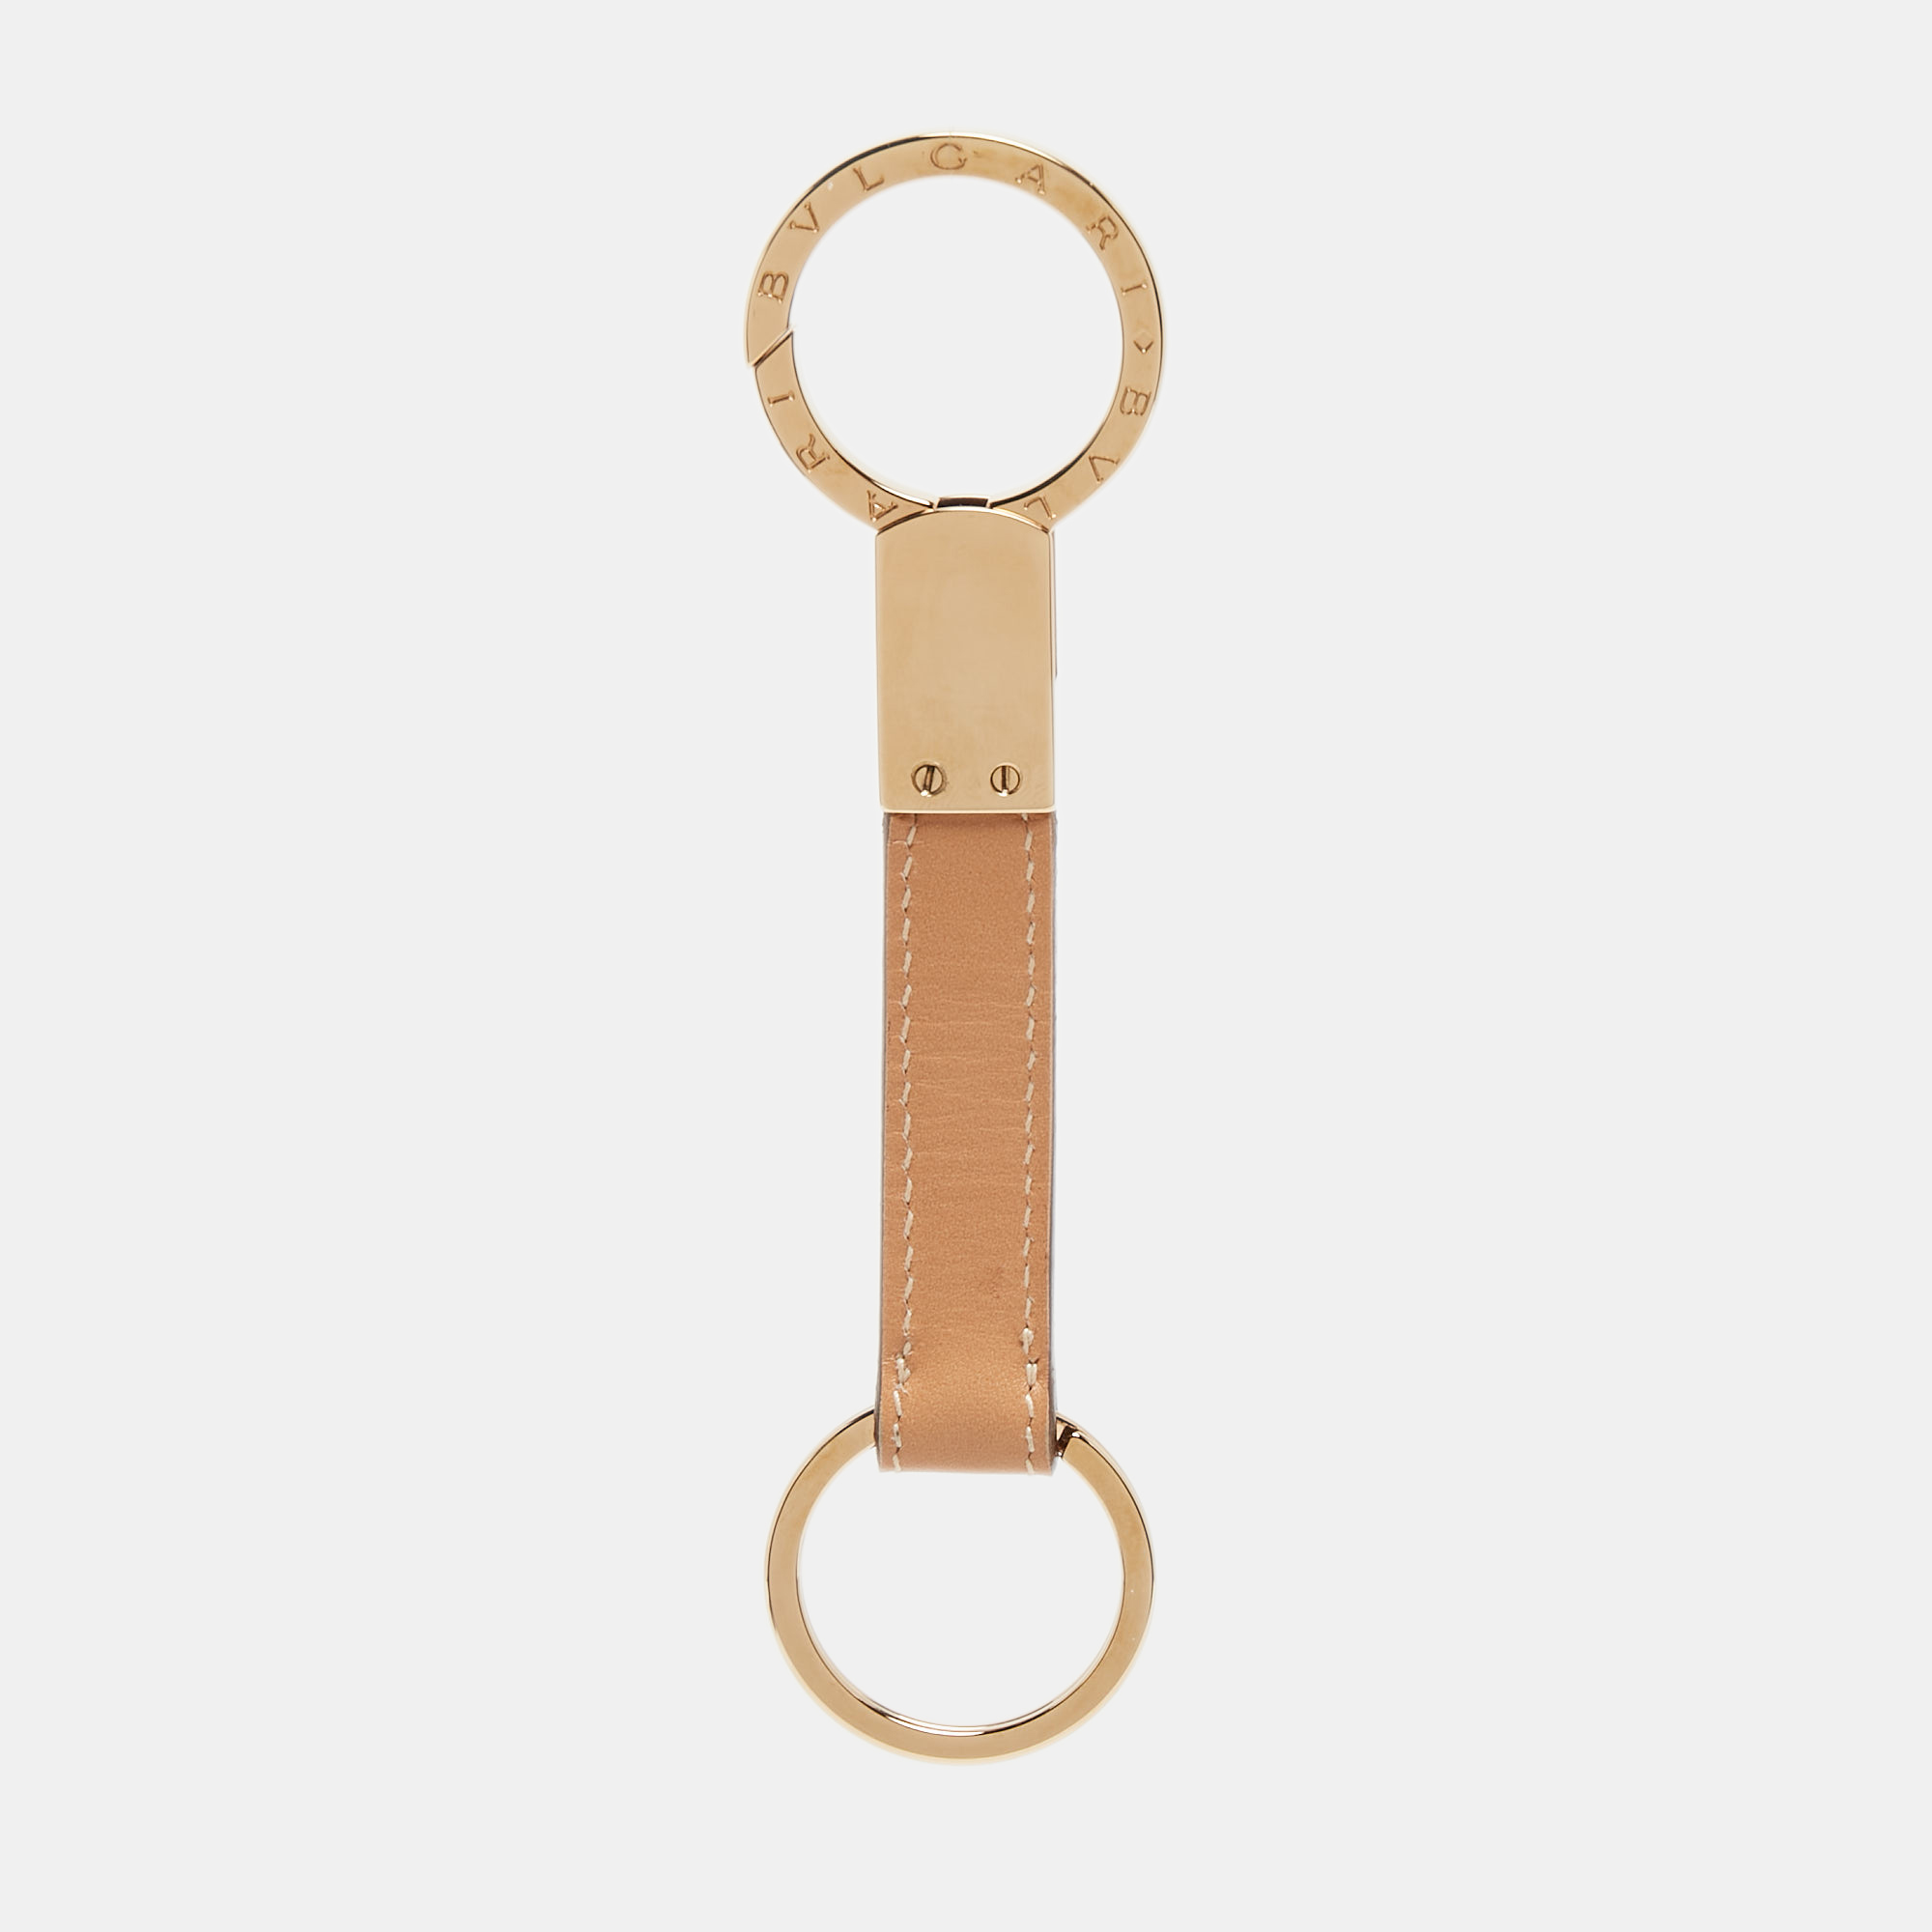 Bvlgari Beige/Gold Leather Ring Keyholder